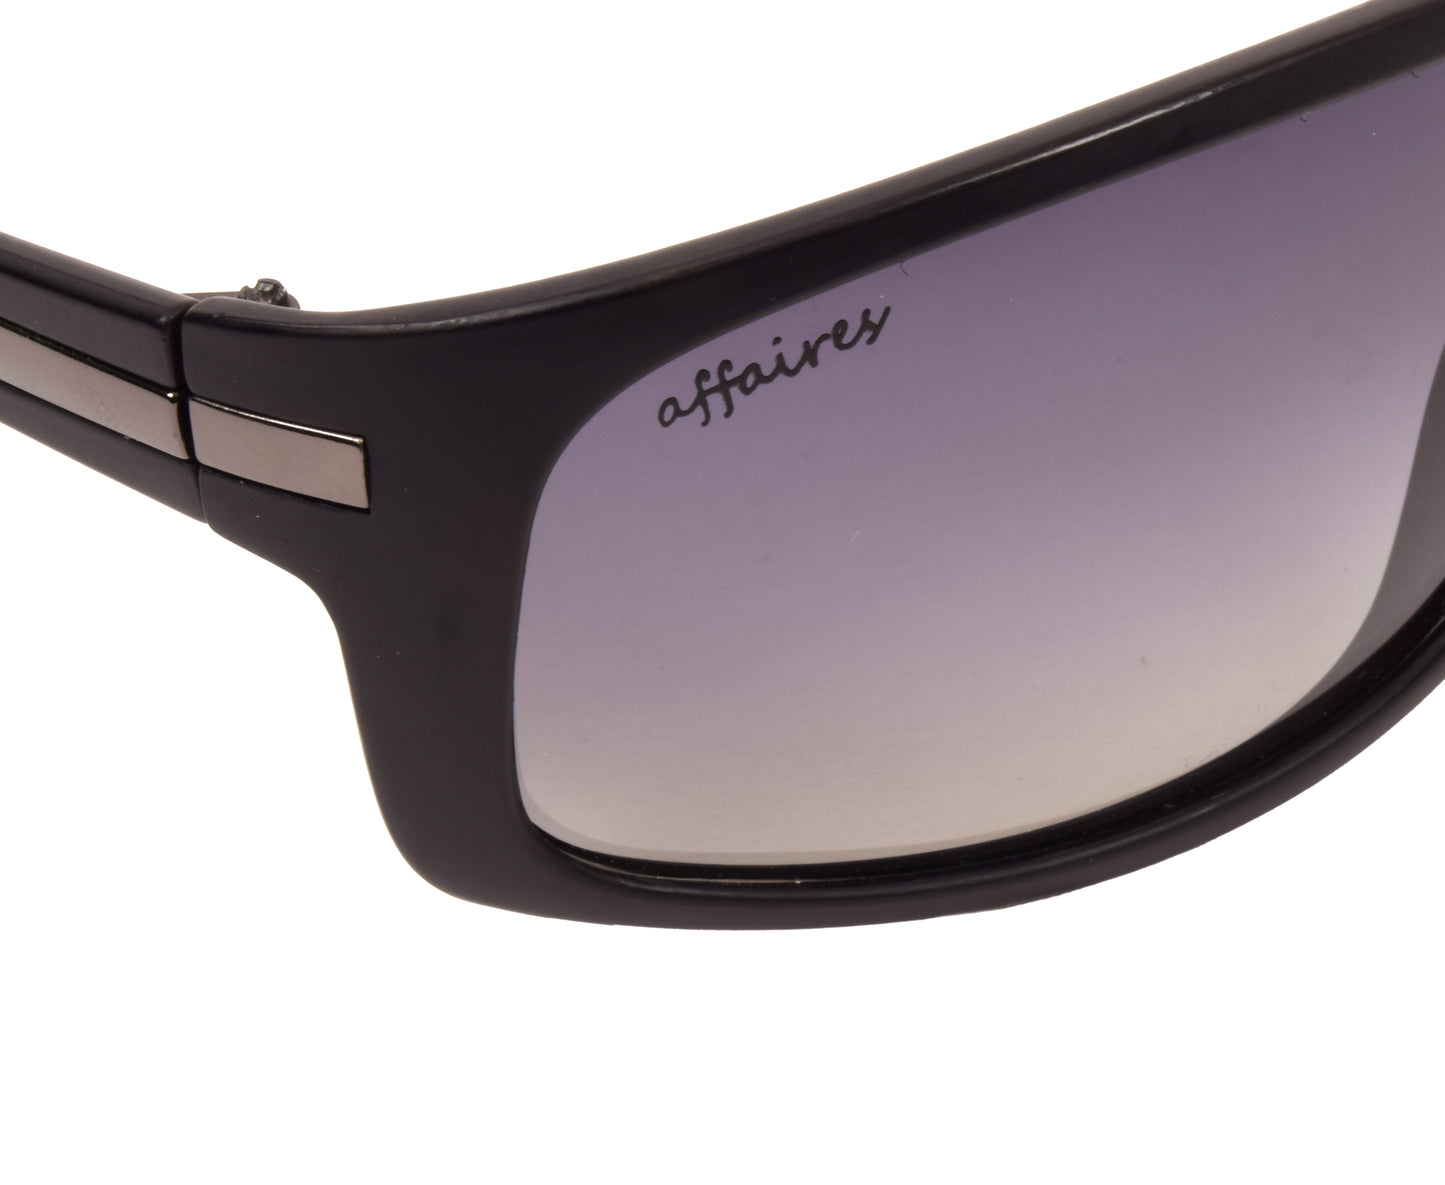 Affaires Sunglasses Black Wrap Full Rim A-405